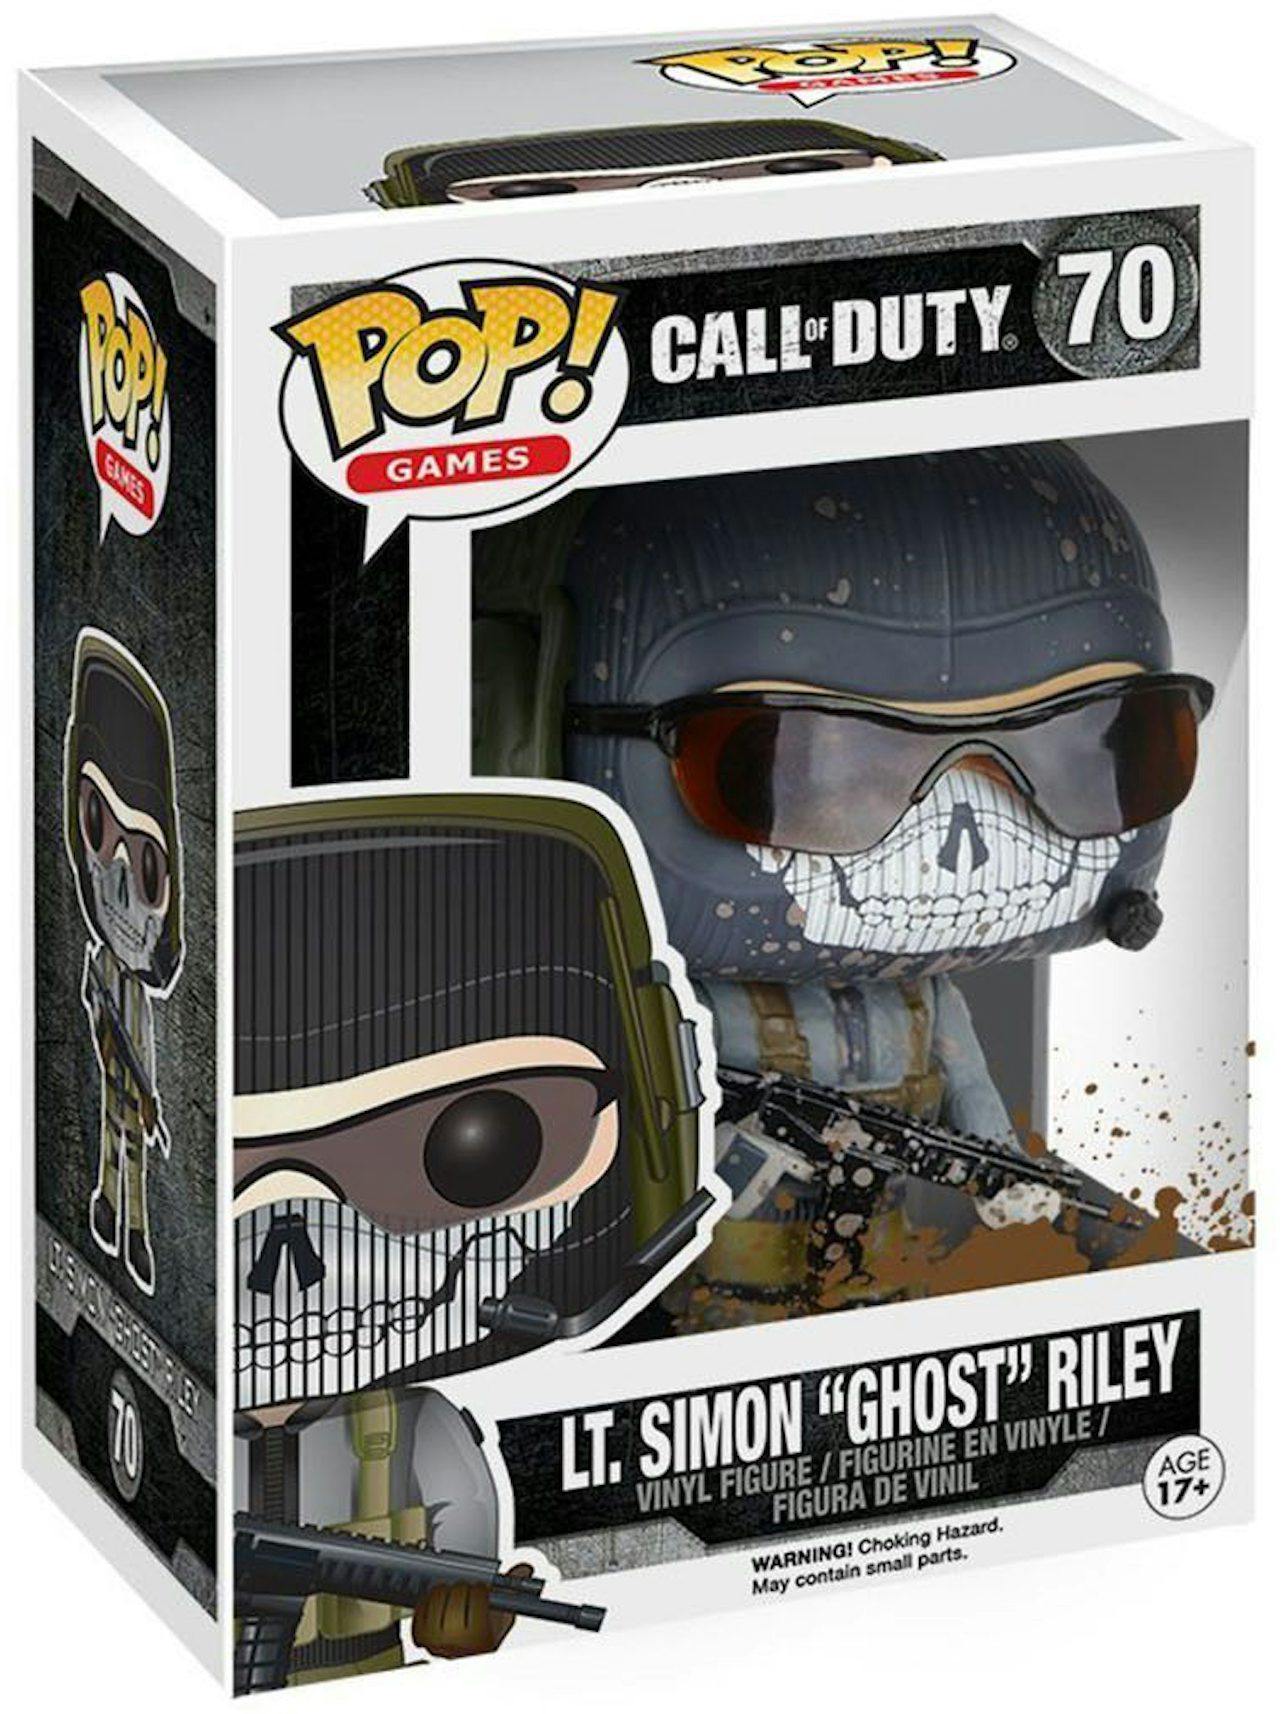 Funko Pop! Vinyl: Call of Duty - Lt. Simon Ghost Riley - (Mud Splatter)  #70 849803068226